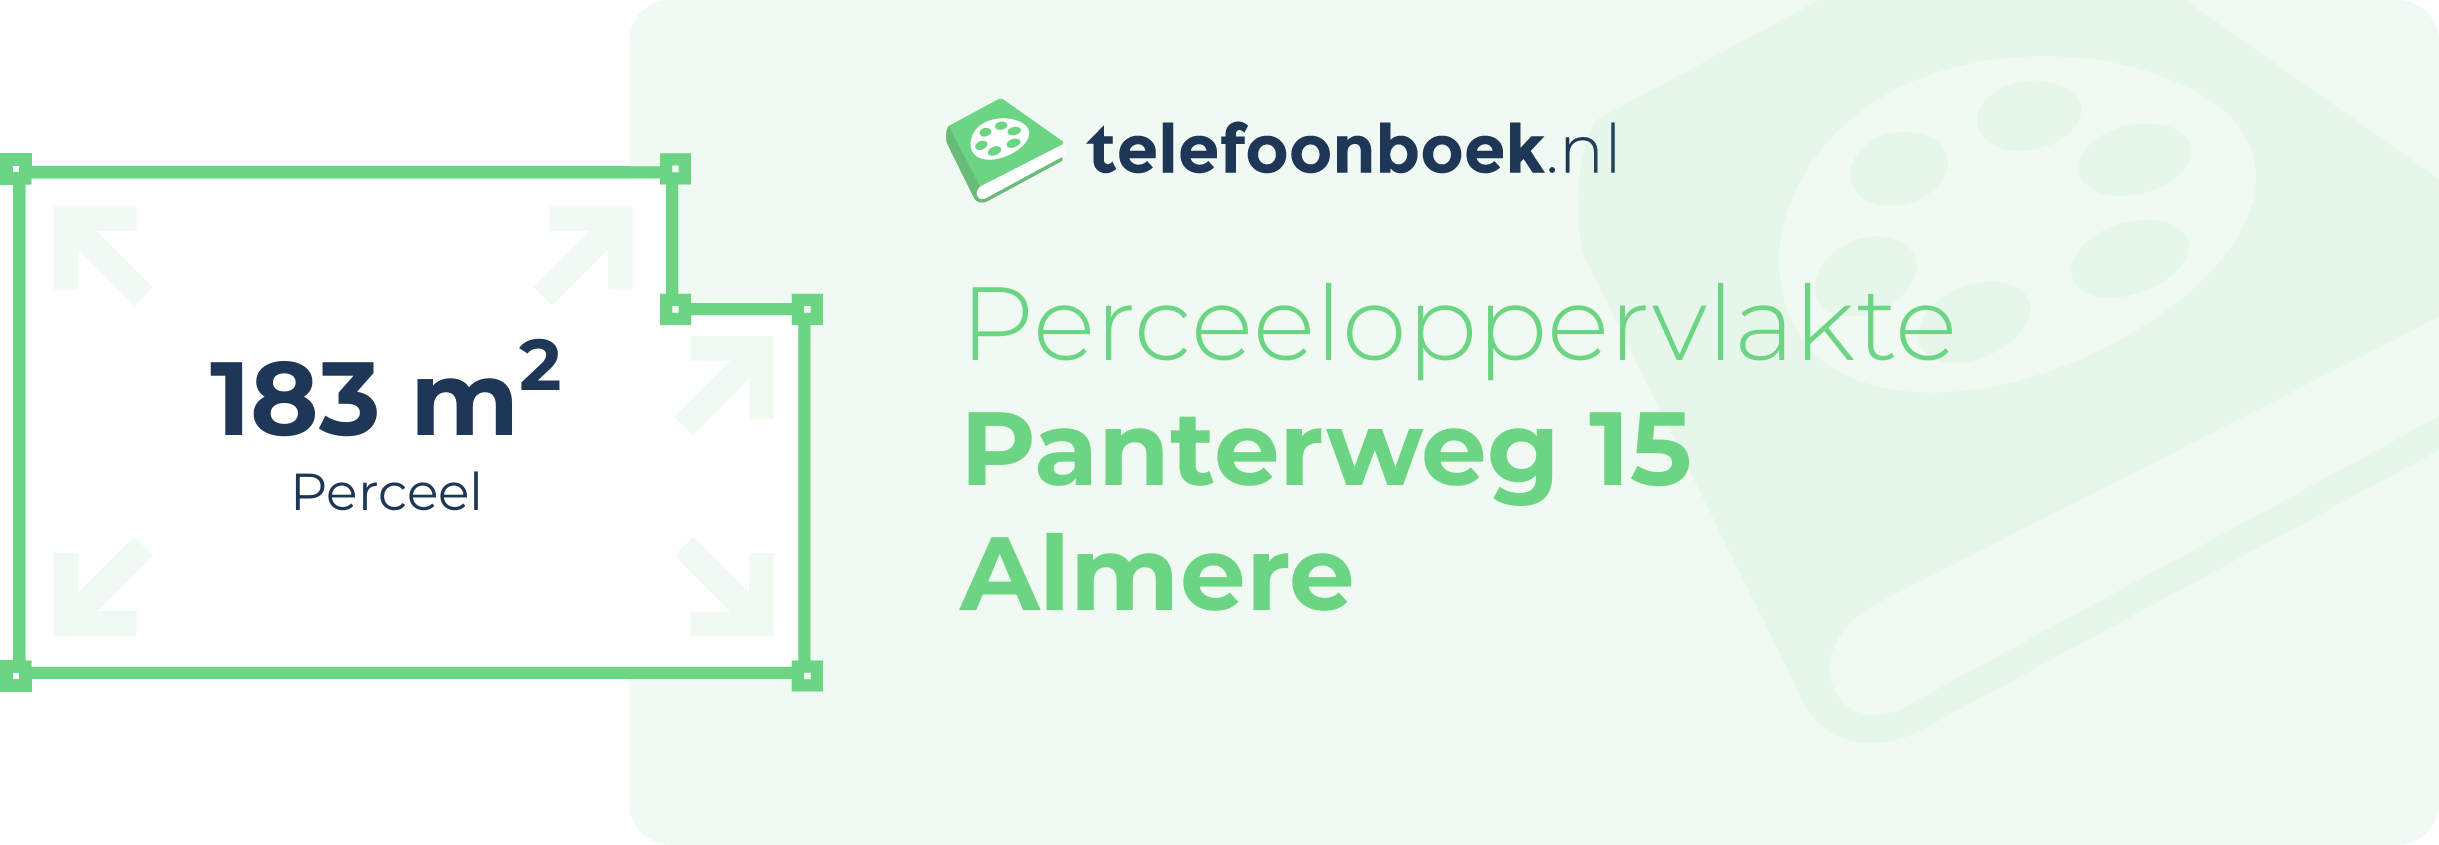 Perceeloppervlakte Panterweg 15 Almere